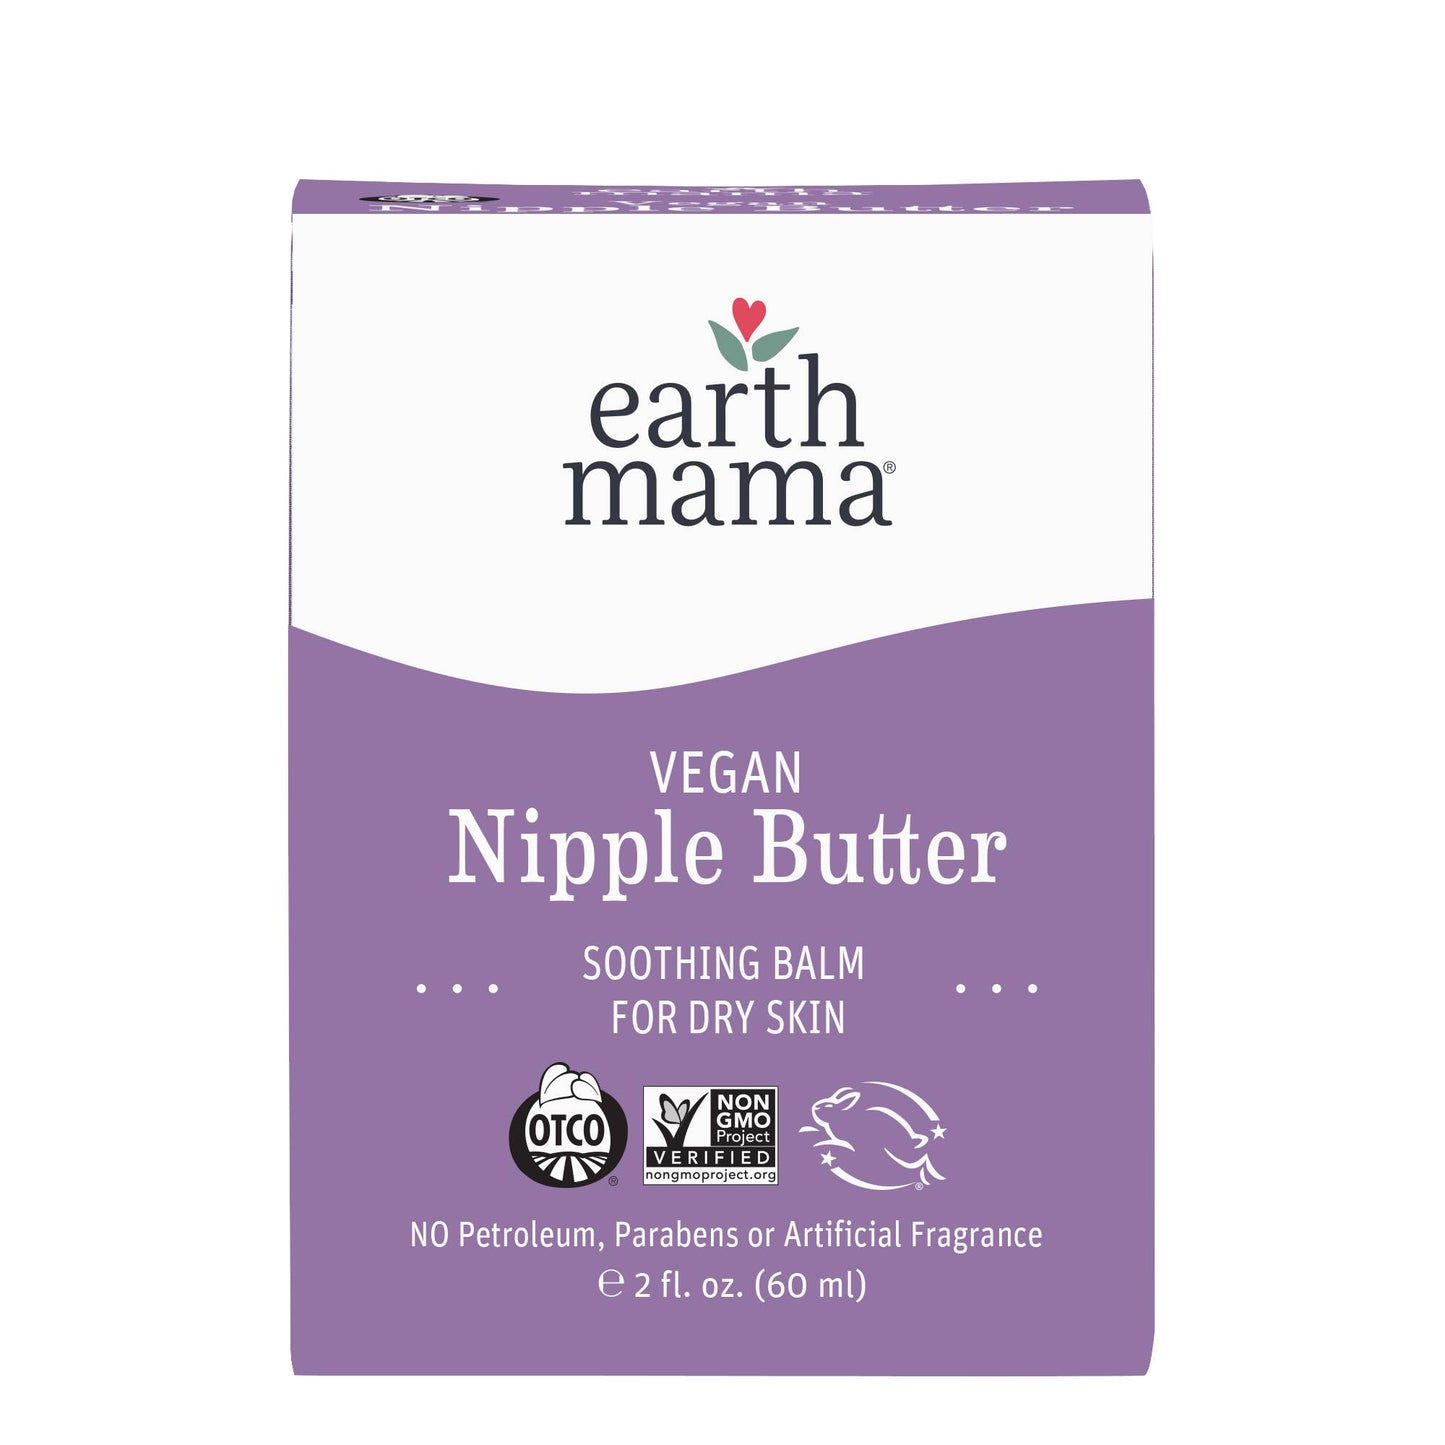 Vegan Nipple Butter